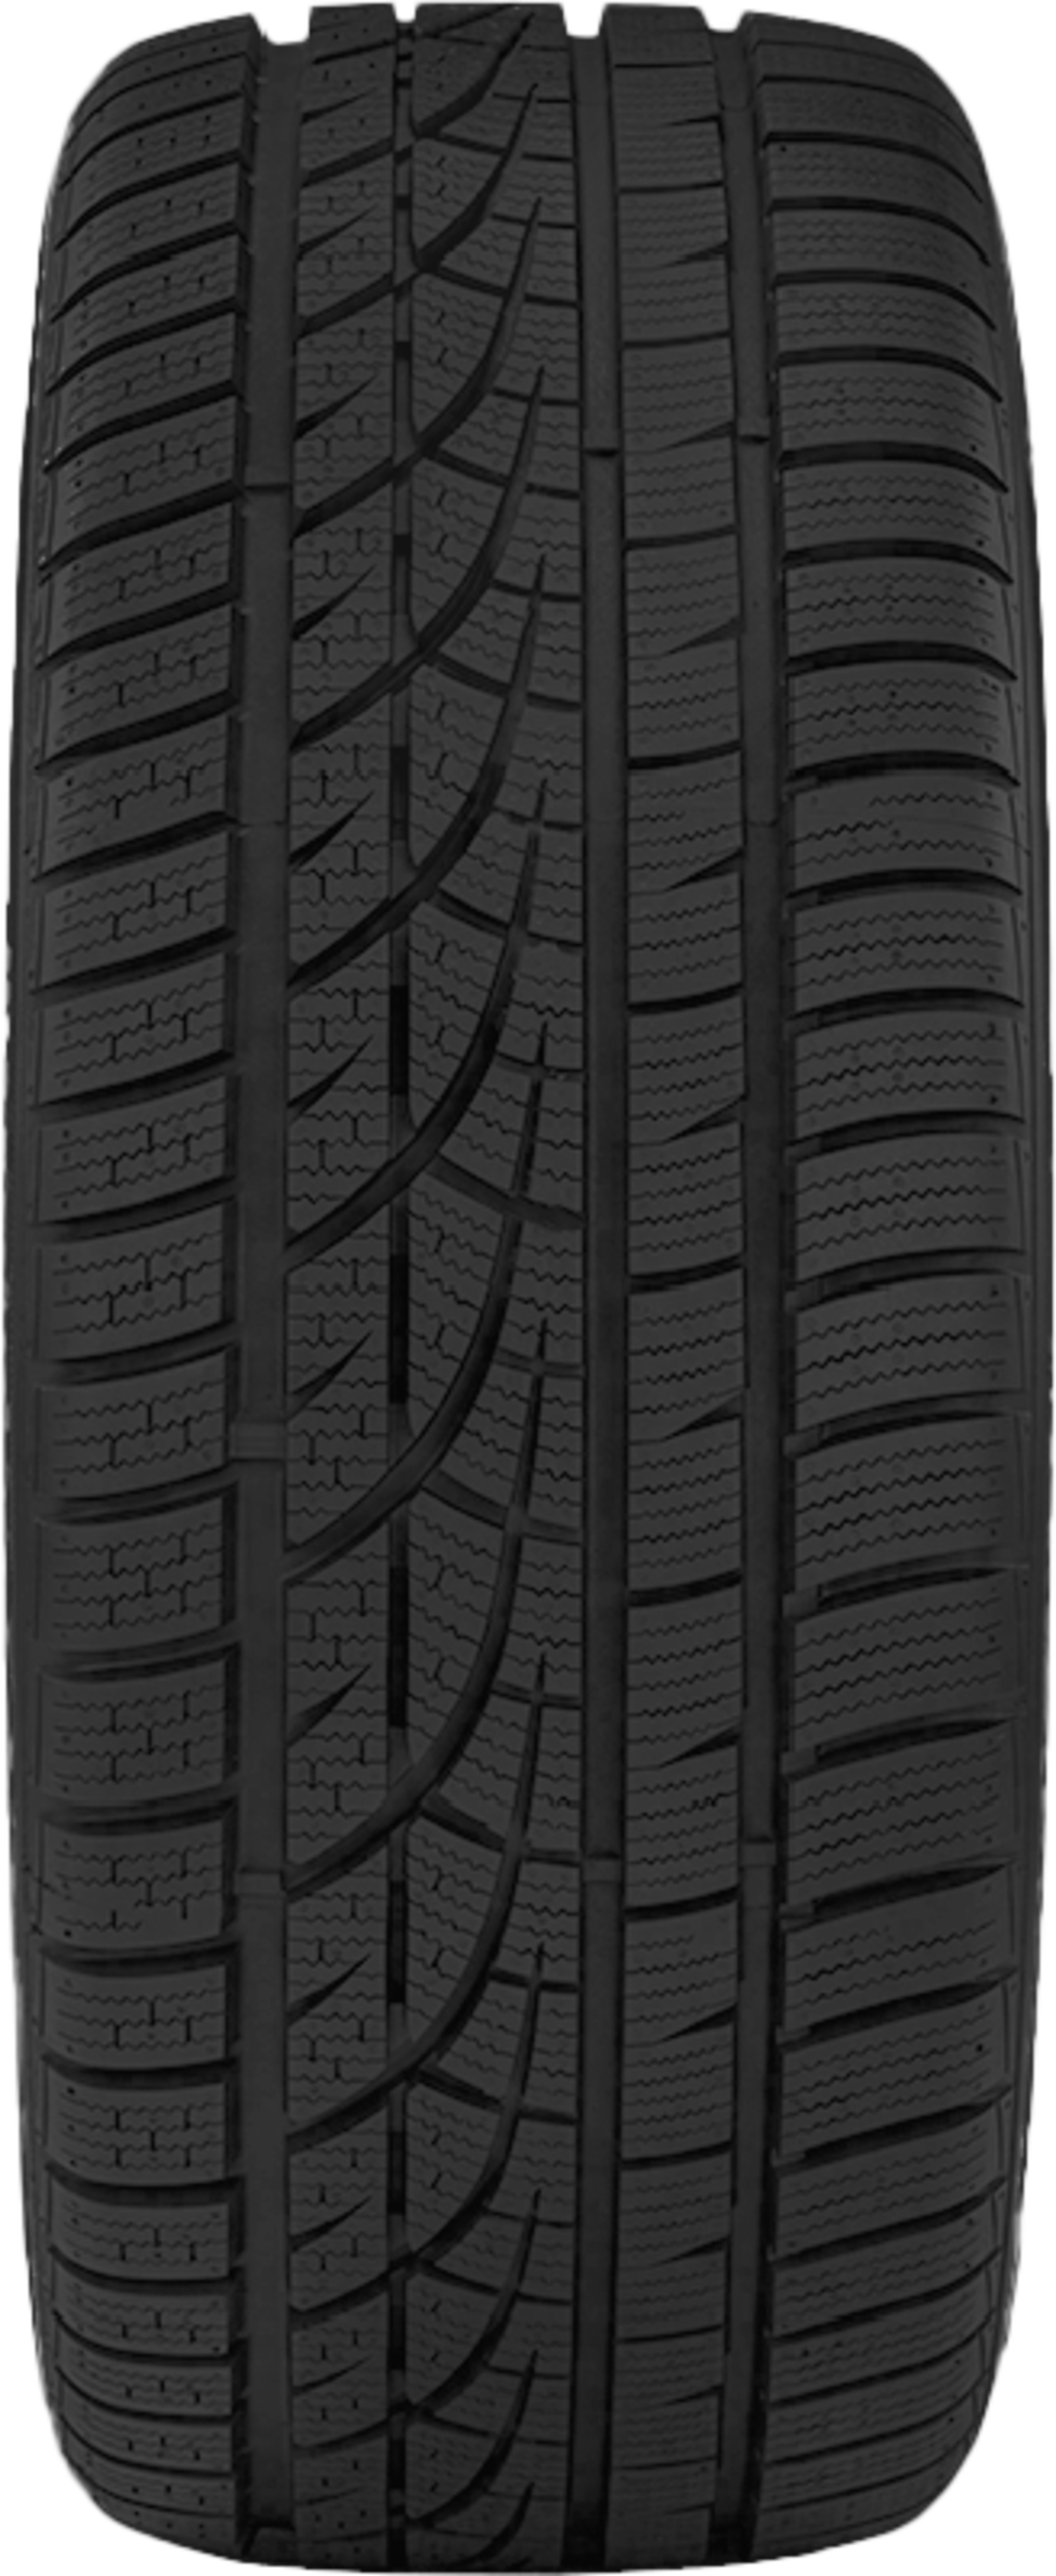 Tires i*cept Hankook evo (W310) | Buy Online Winter SimpleTire